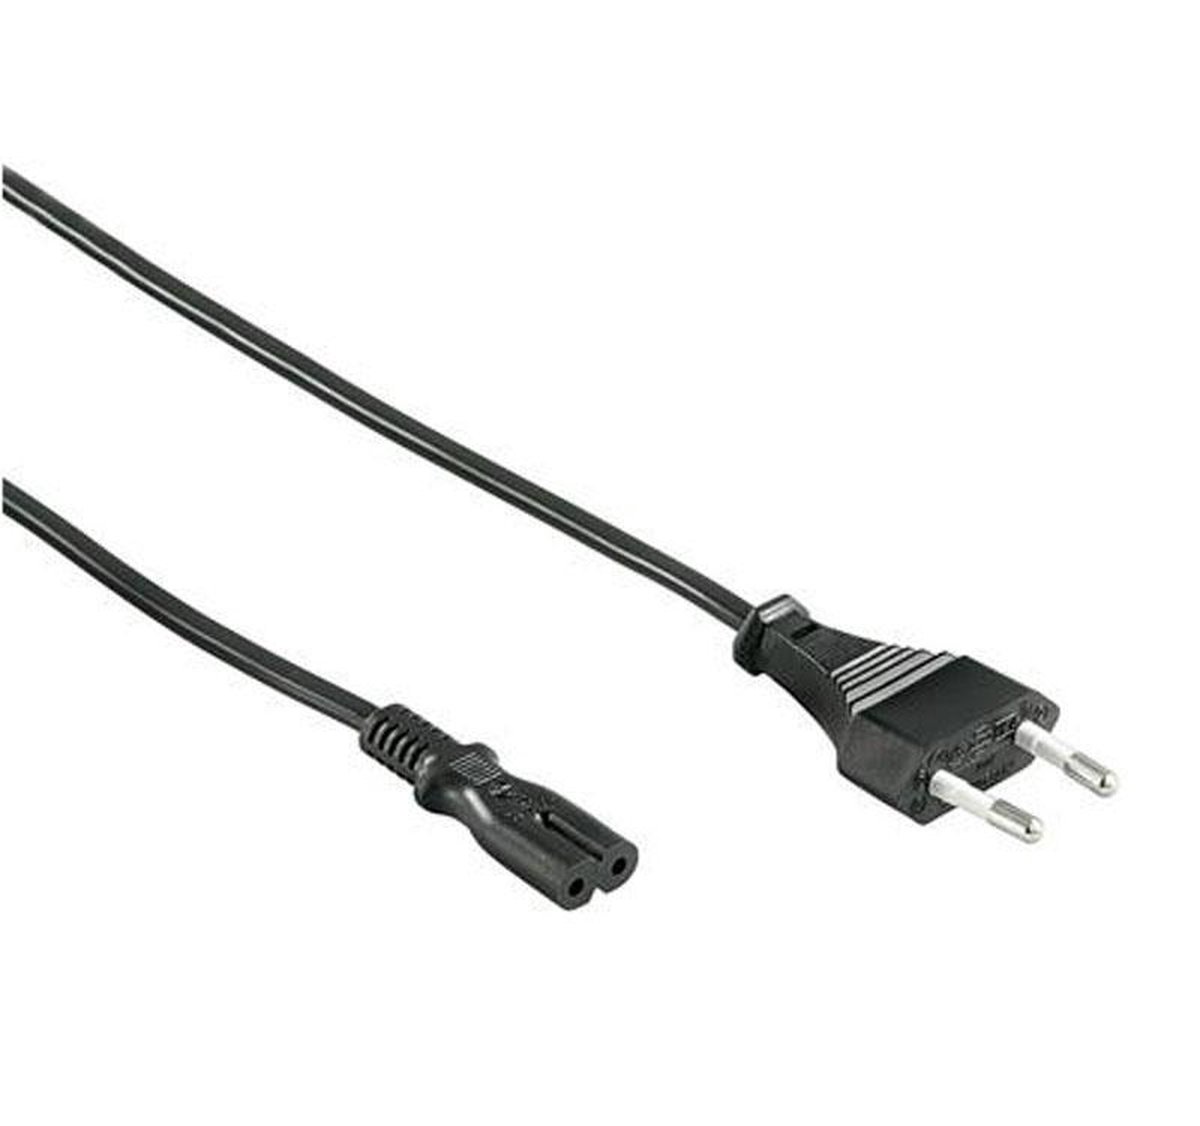 Valueline - Euro - C7 kabel - 1.5 meter | bol.com